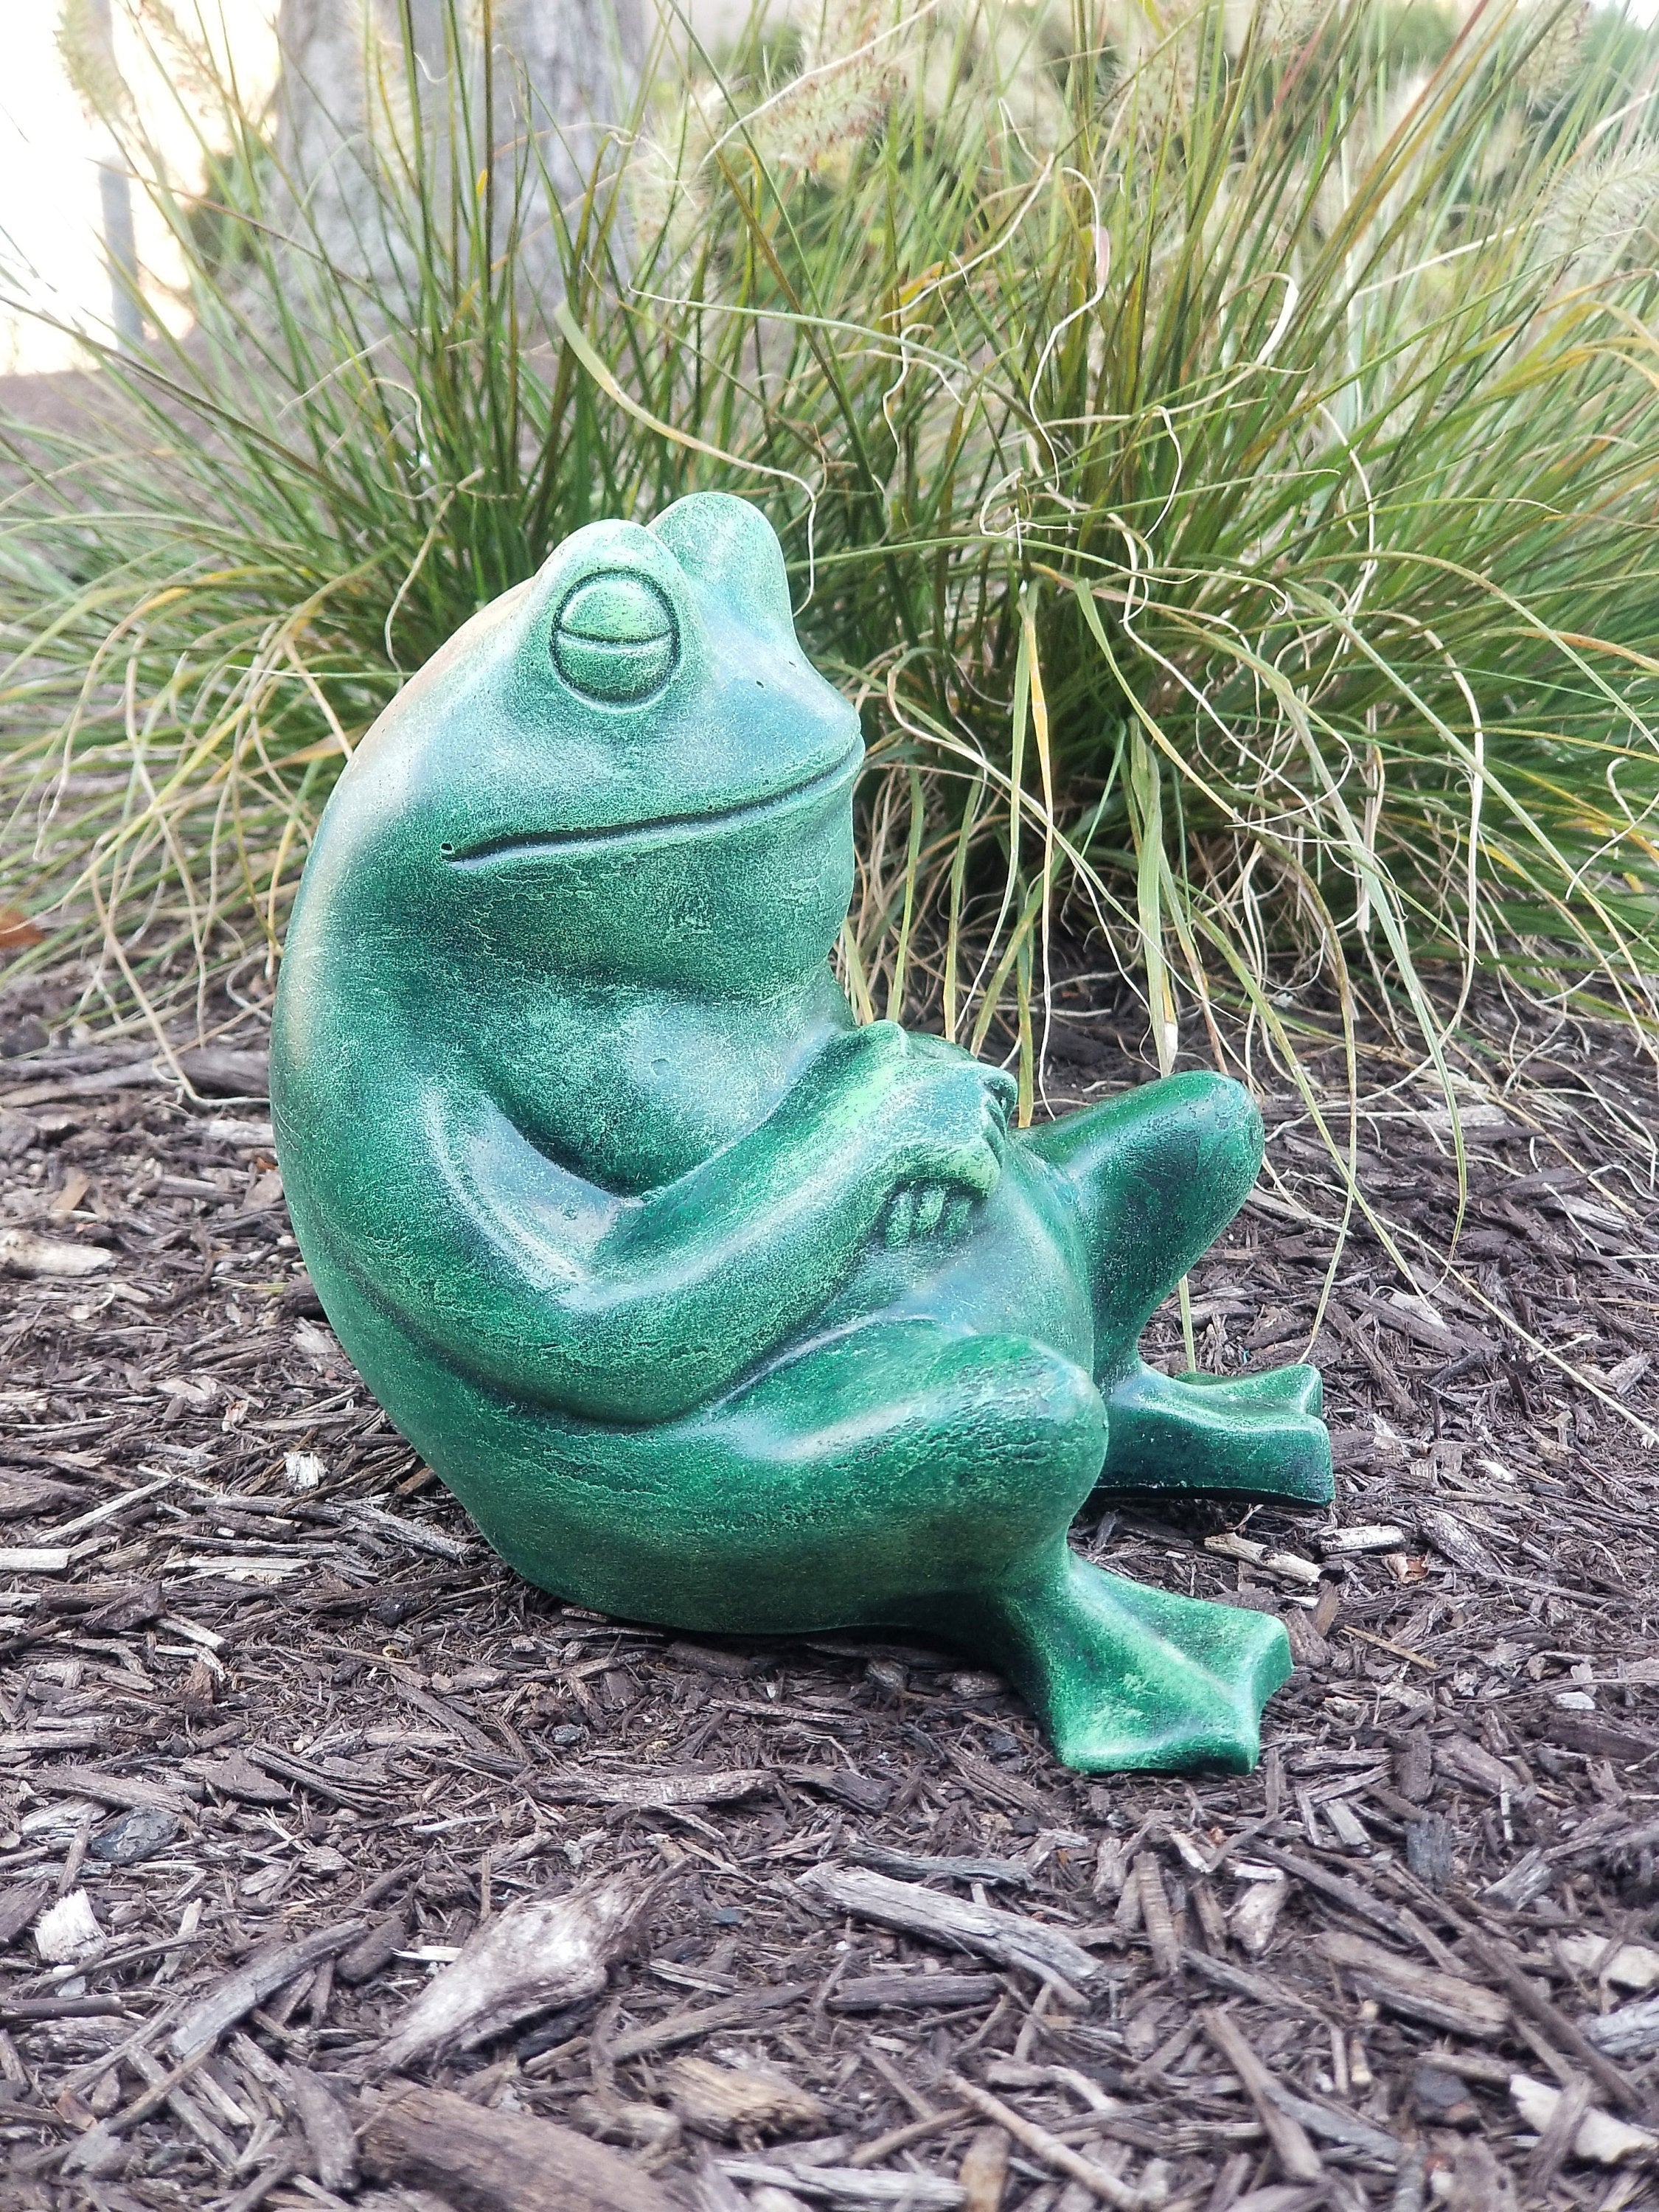 Sitting Vintage Frog Sculpture Home Garden Decor Art Statue Art Of History Sculpture 9257